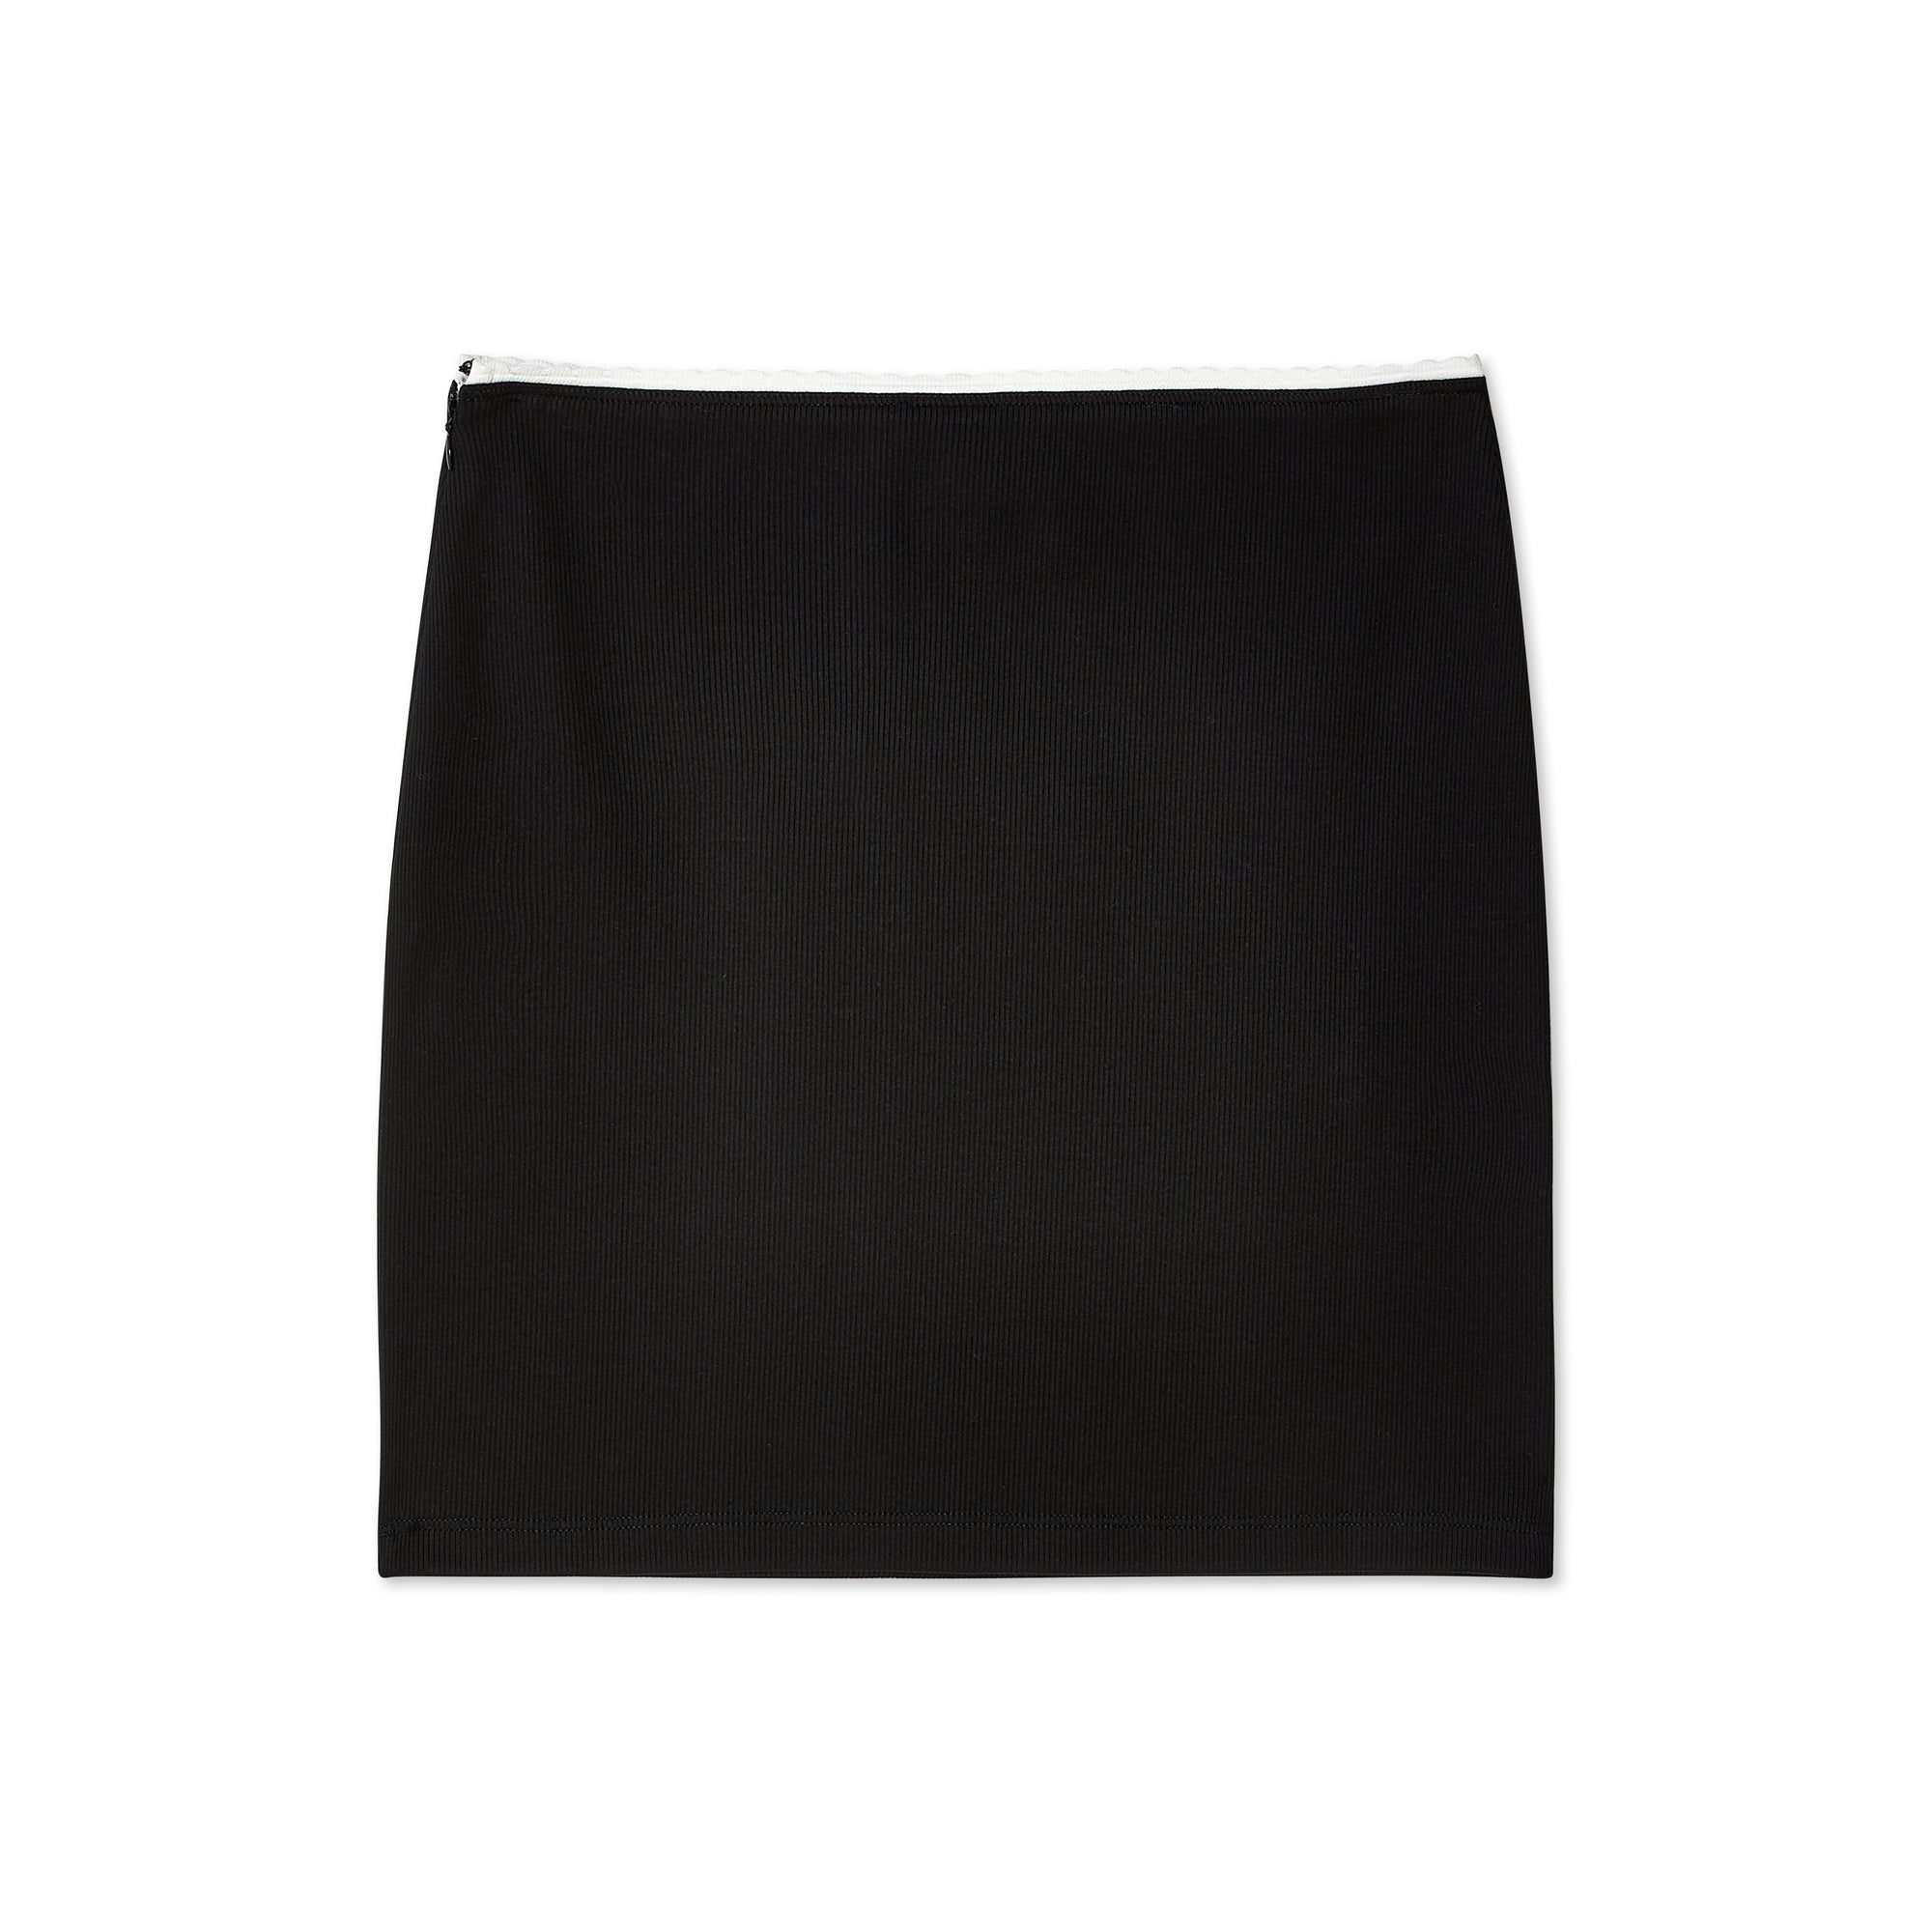 Miu Miu - Women's Skirt - (Black) view 2